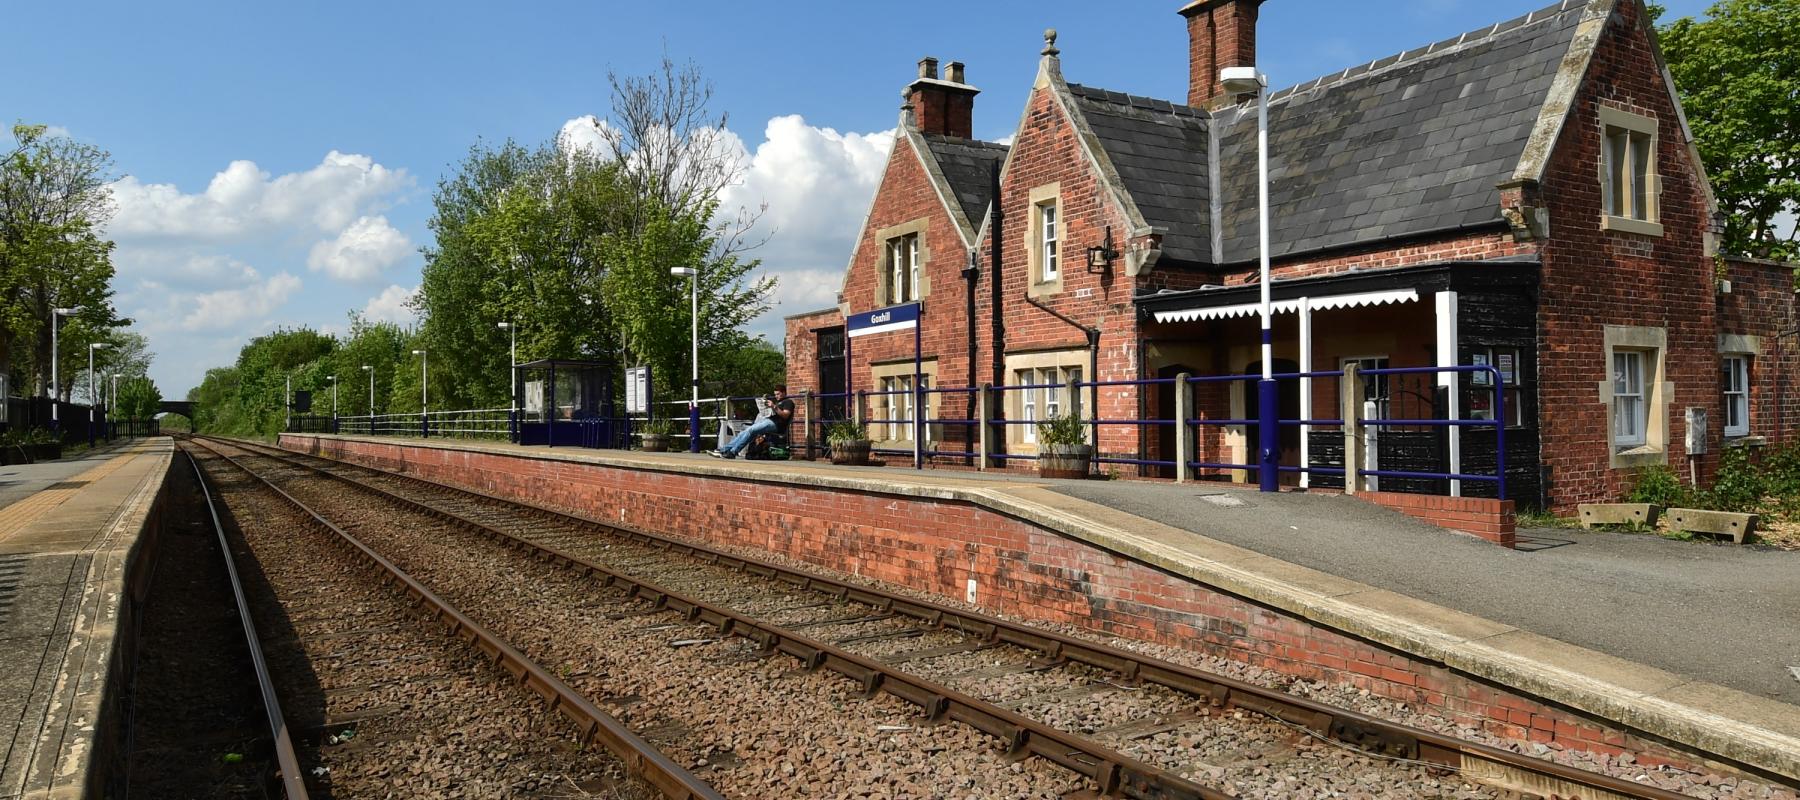 Goxhill Station along the Barton Line, Yorkshire